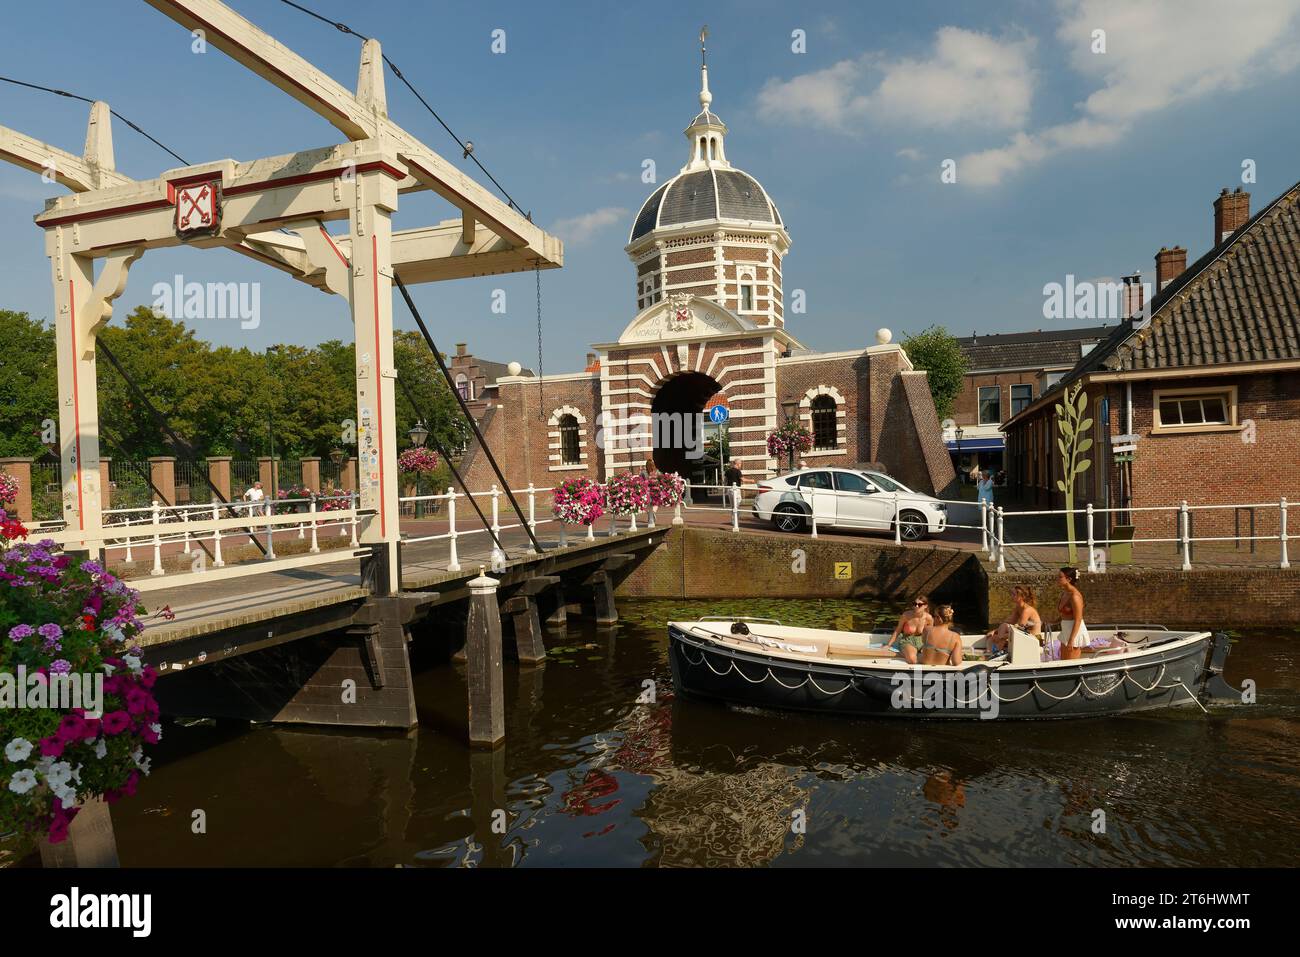 Vista di Morspoort con Morspoortbrug nei paesi di Leida / Leida, Olanda meridionale, Olanda meridionale, Olanda meridionale, Benelux, Benelux, Benelux, paesi Bassi, Nederland Foto Stock